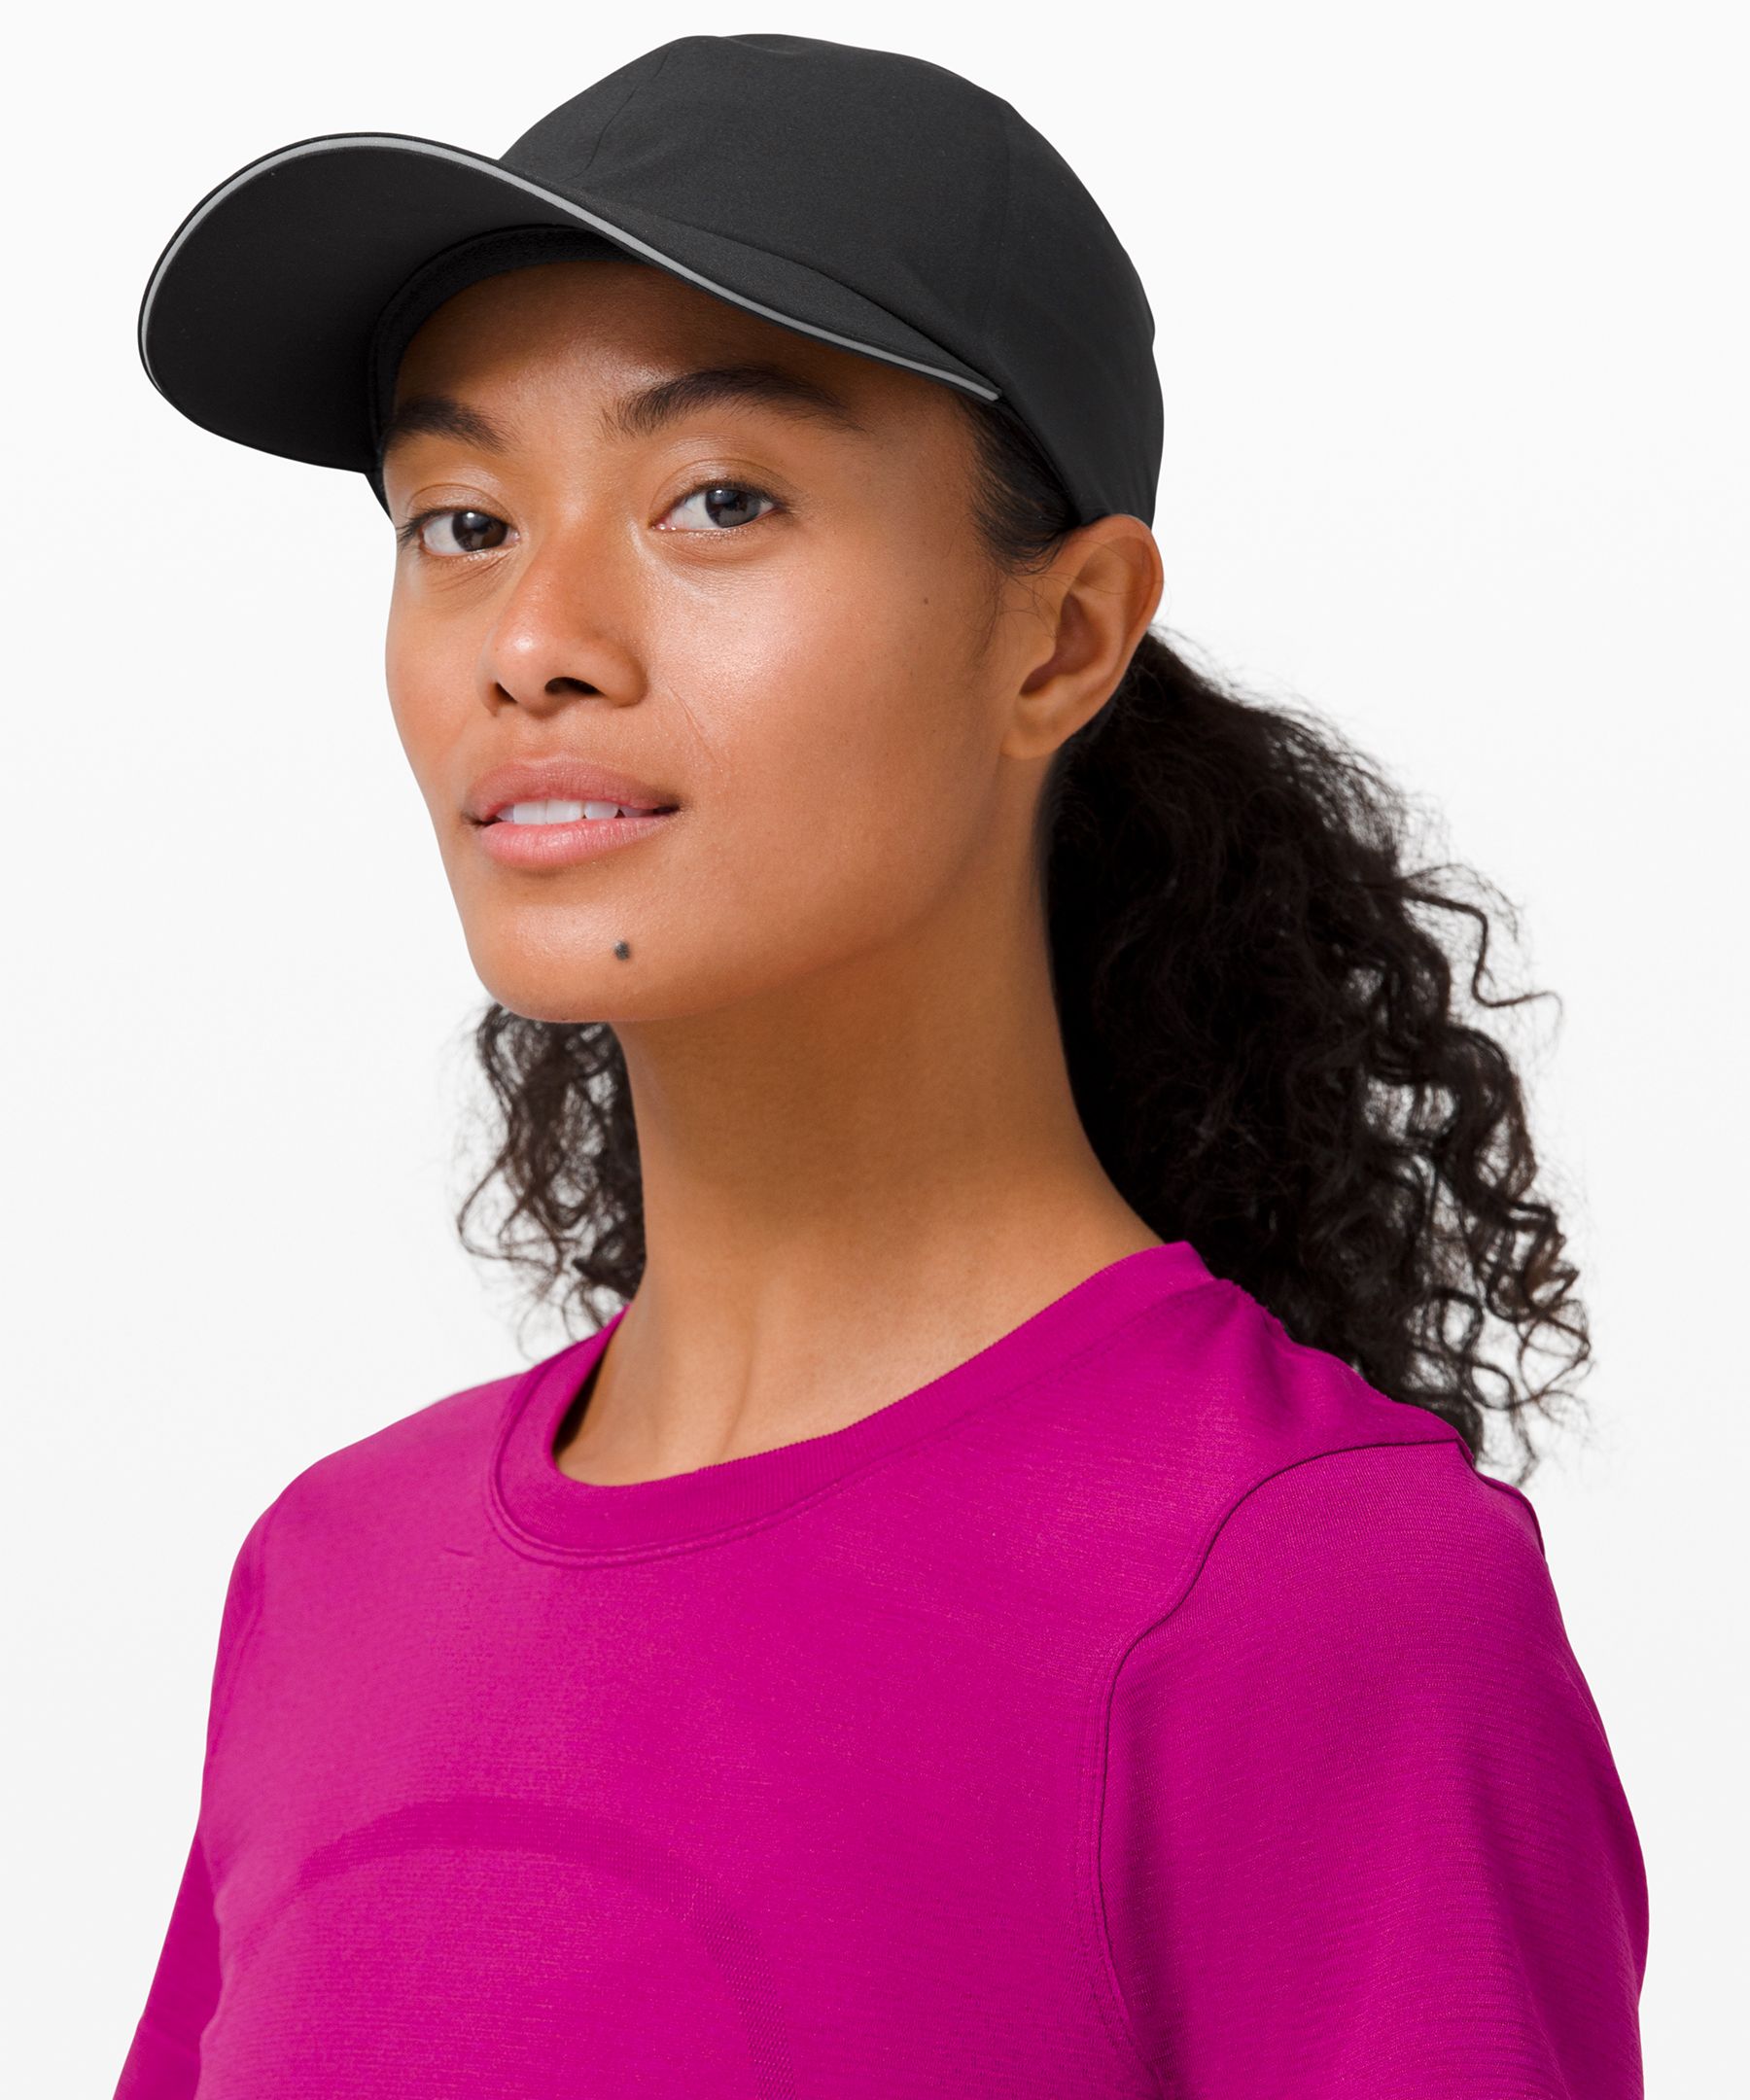 GADIEMKENSD Women's Race Day Running Hat Performance Mesh, 51% OFF